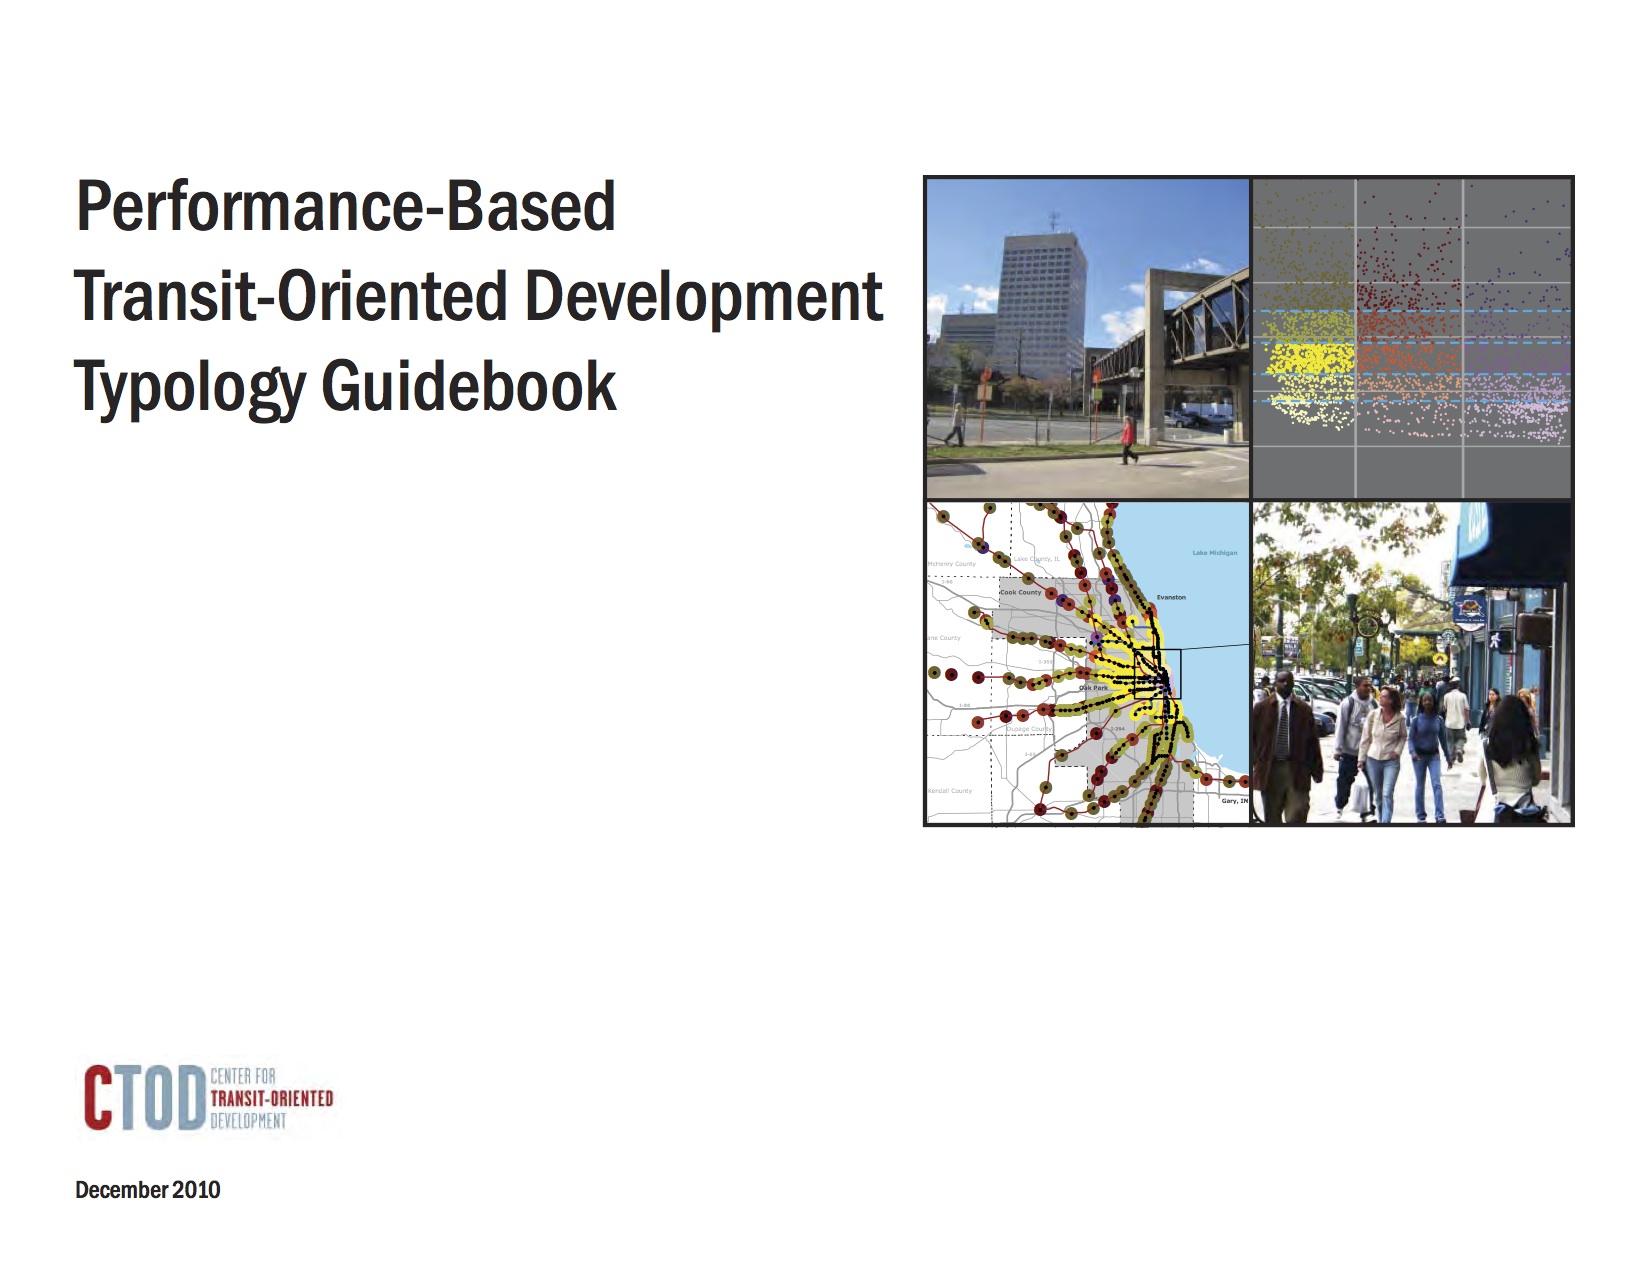 Performance-Based Transit-Oriented Development Typology Guidebook